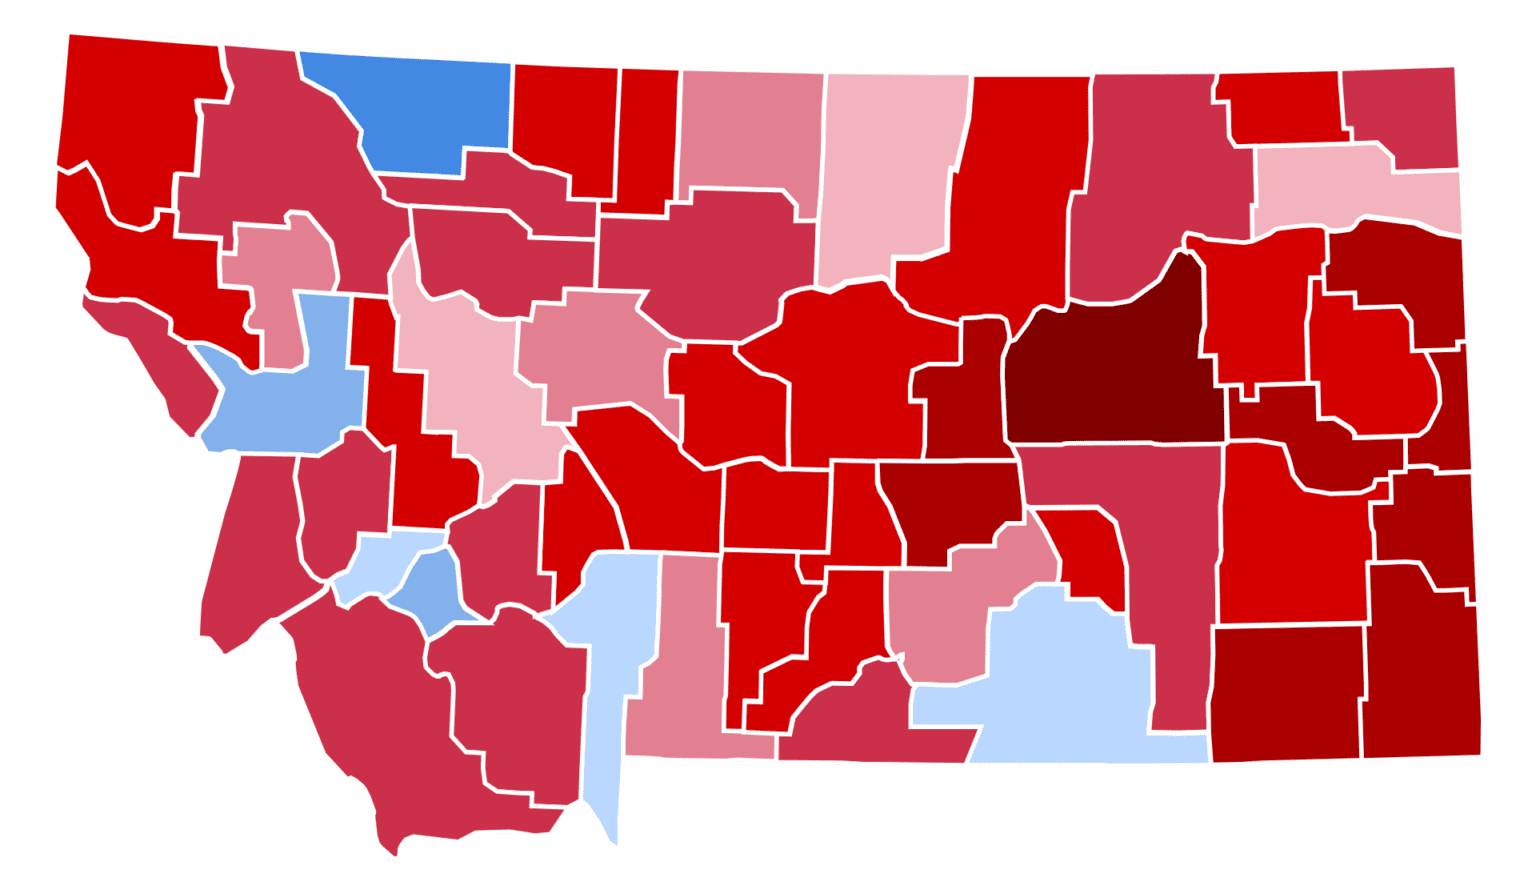 Daines, Bullock tied in Montana Senate race, according to polls